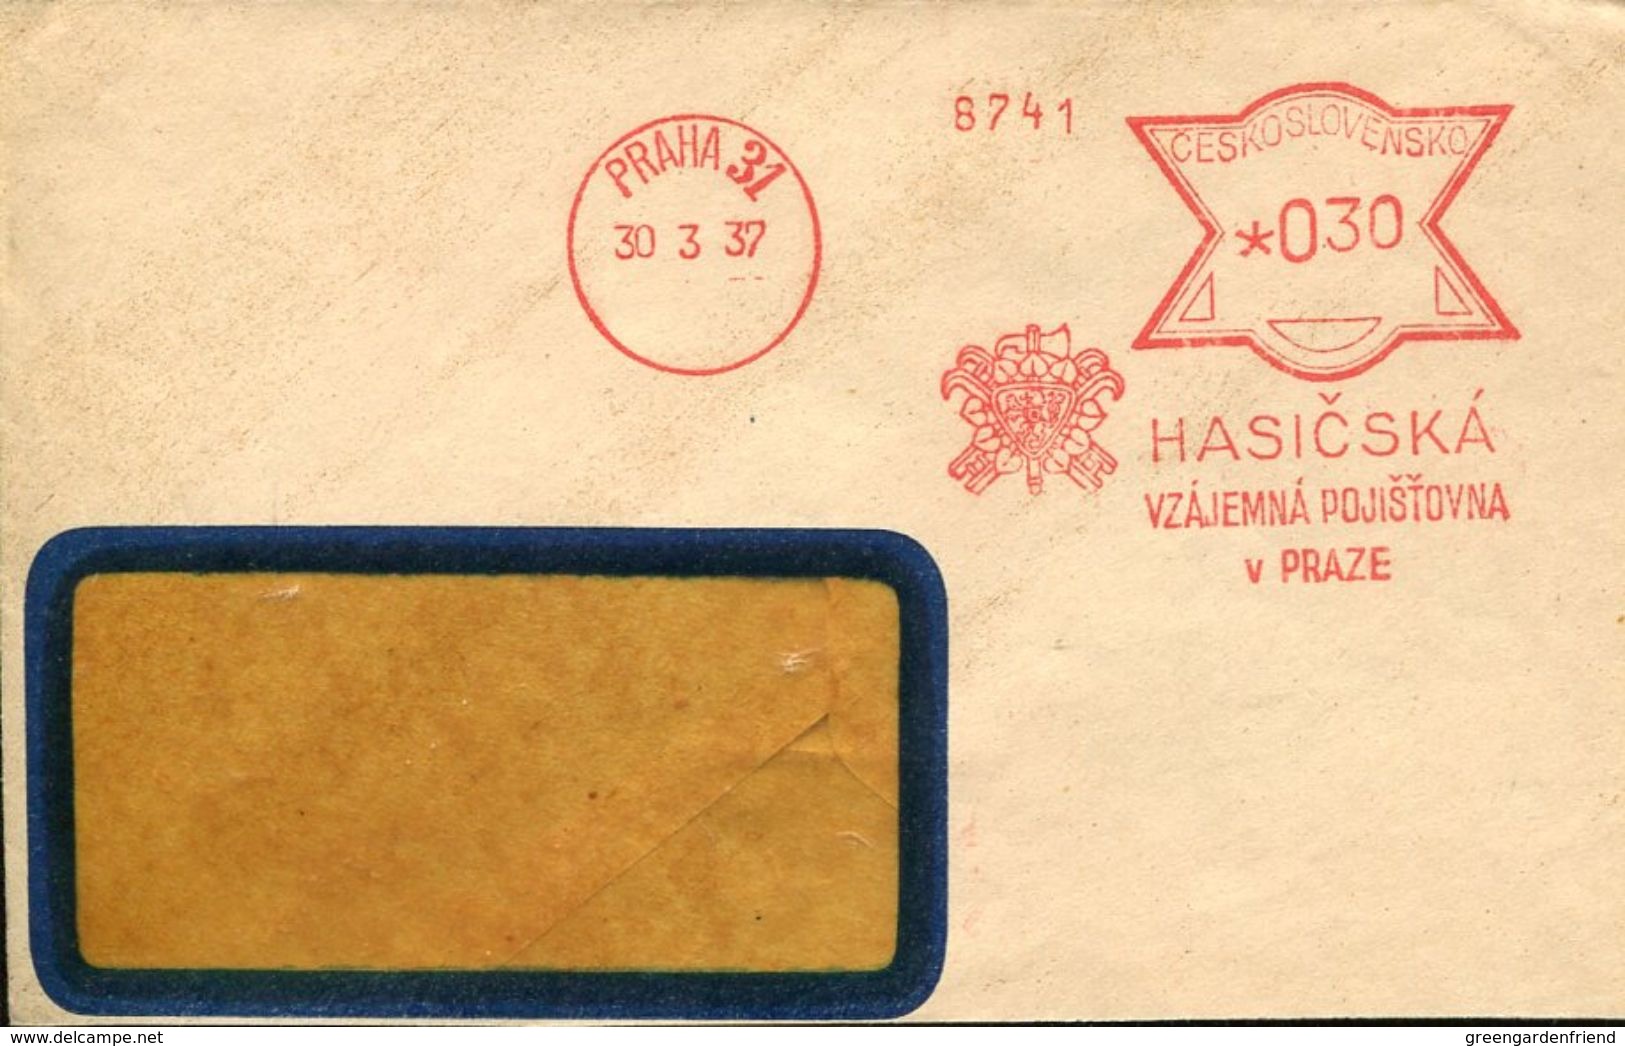 29304 Ceskoslovensko, Red Meter/freistempel/ema/praha 1938 Hasicska, Circuled Cover - Briefe U. Dokumente